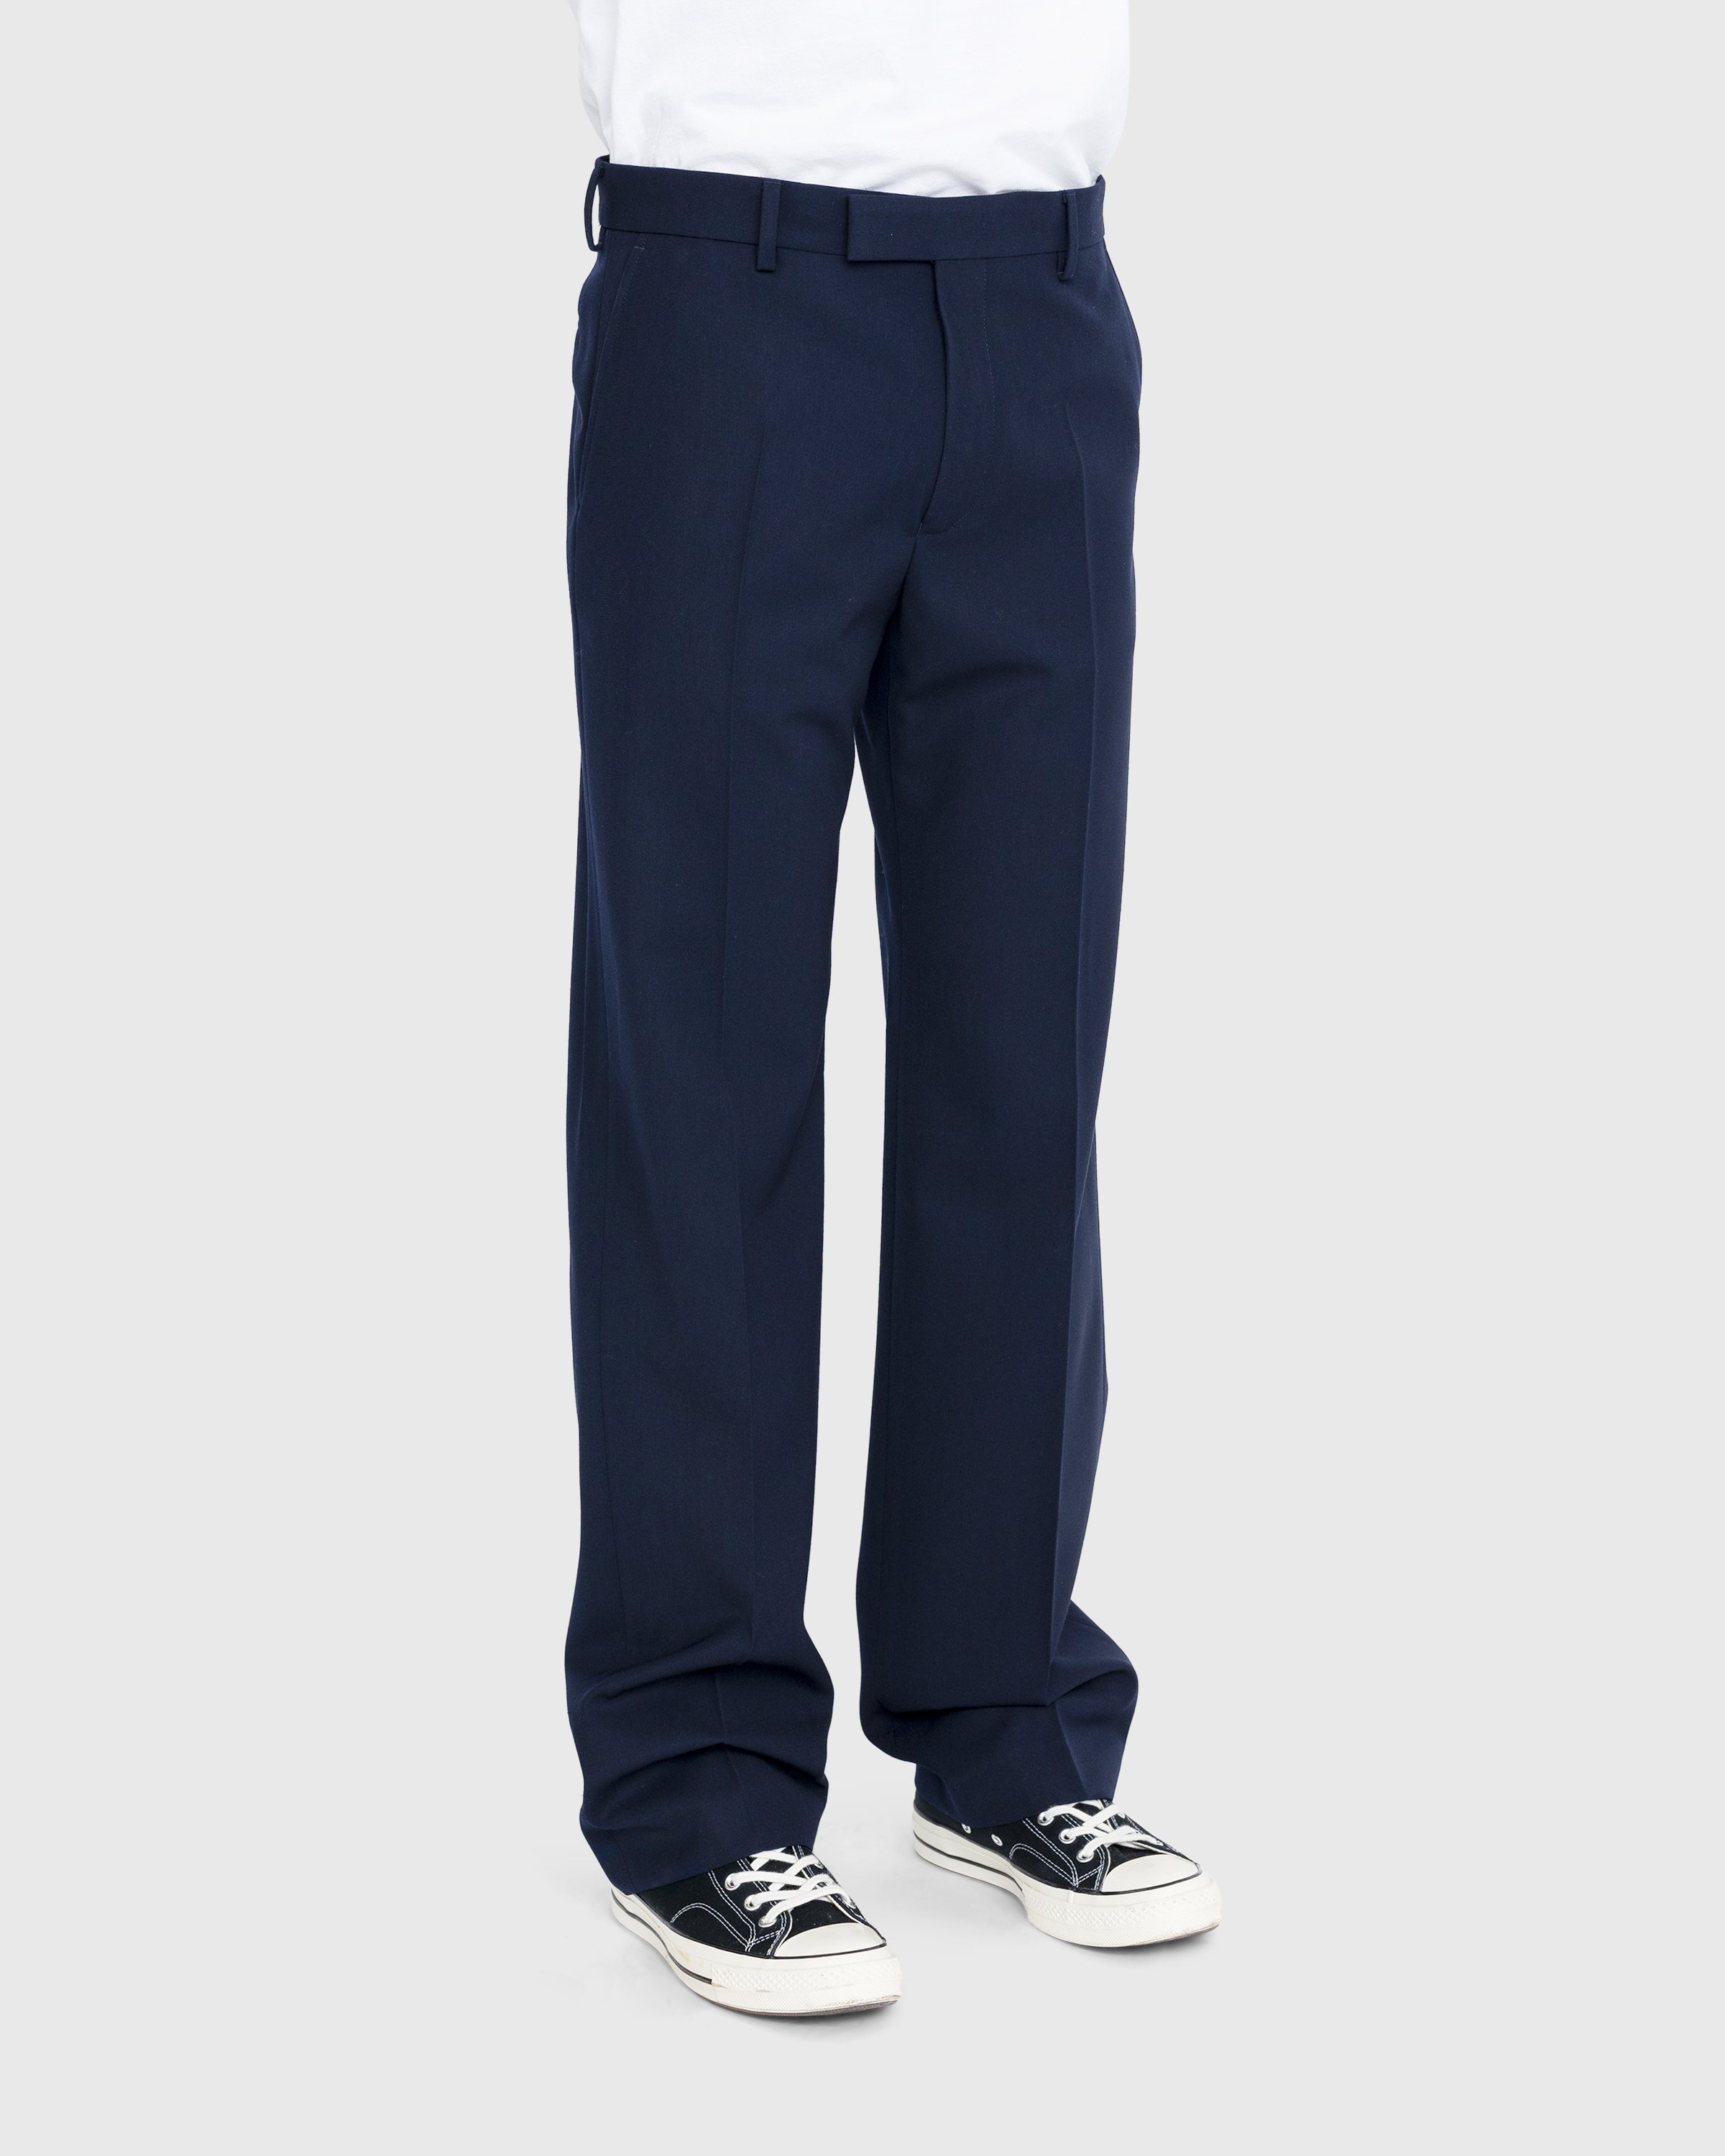 Dries van Noten – Pinnet Long Pants Blue - Pants - Blue - Image 3